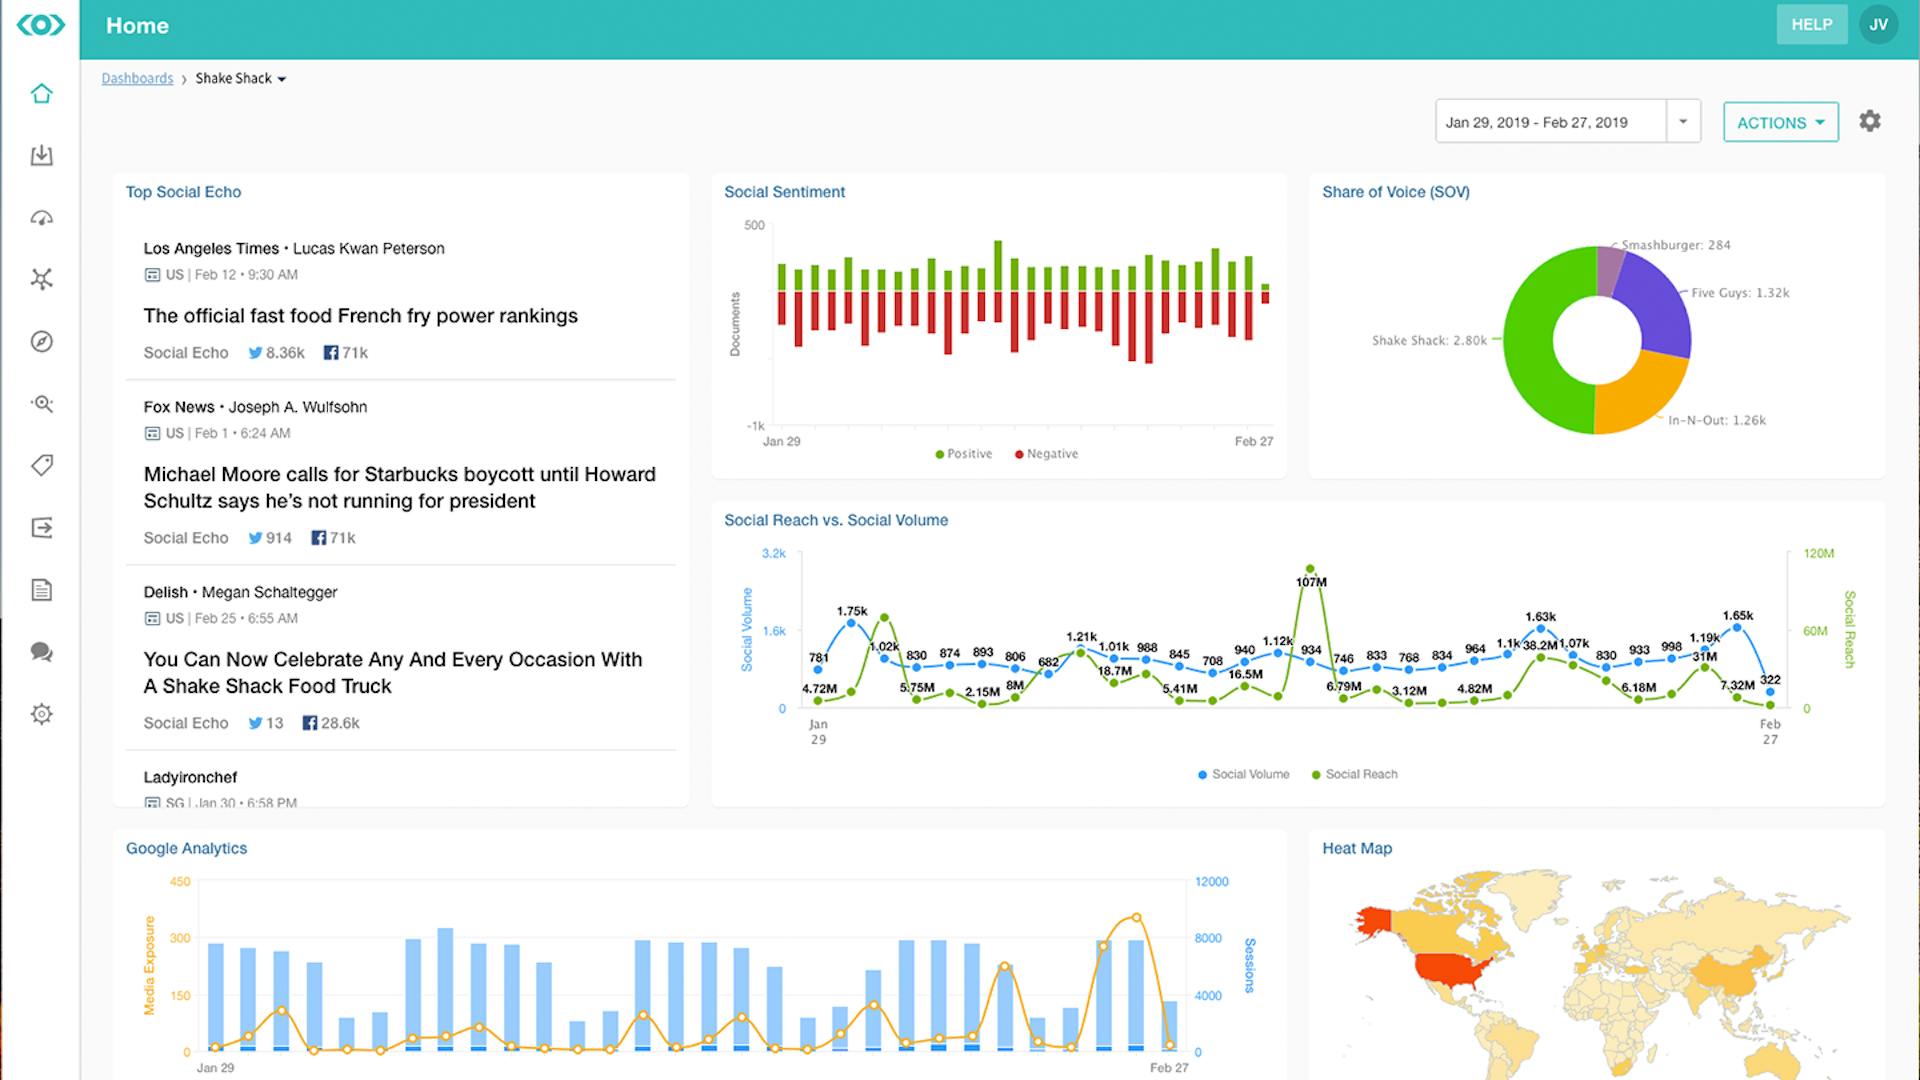 Screenshot of the Meltwater media monitoring and analysis platform